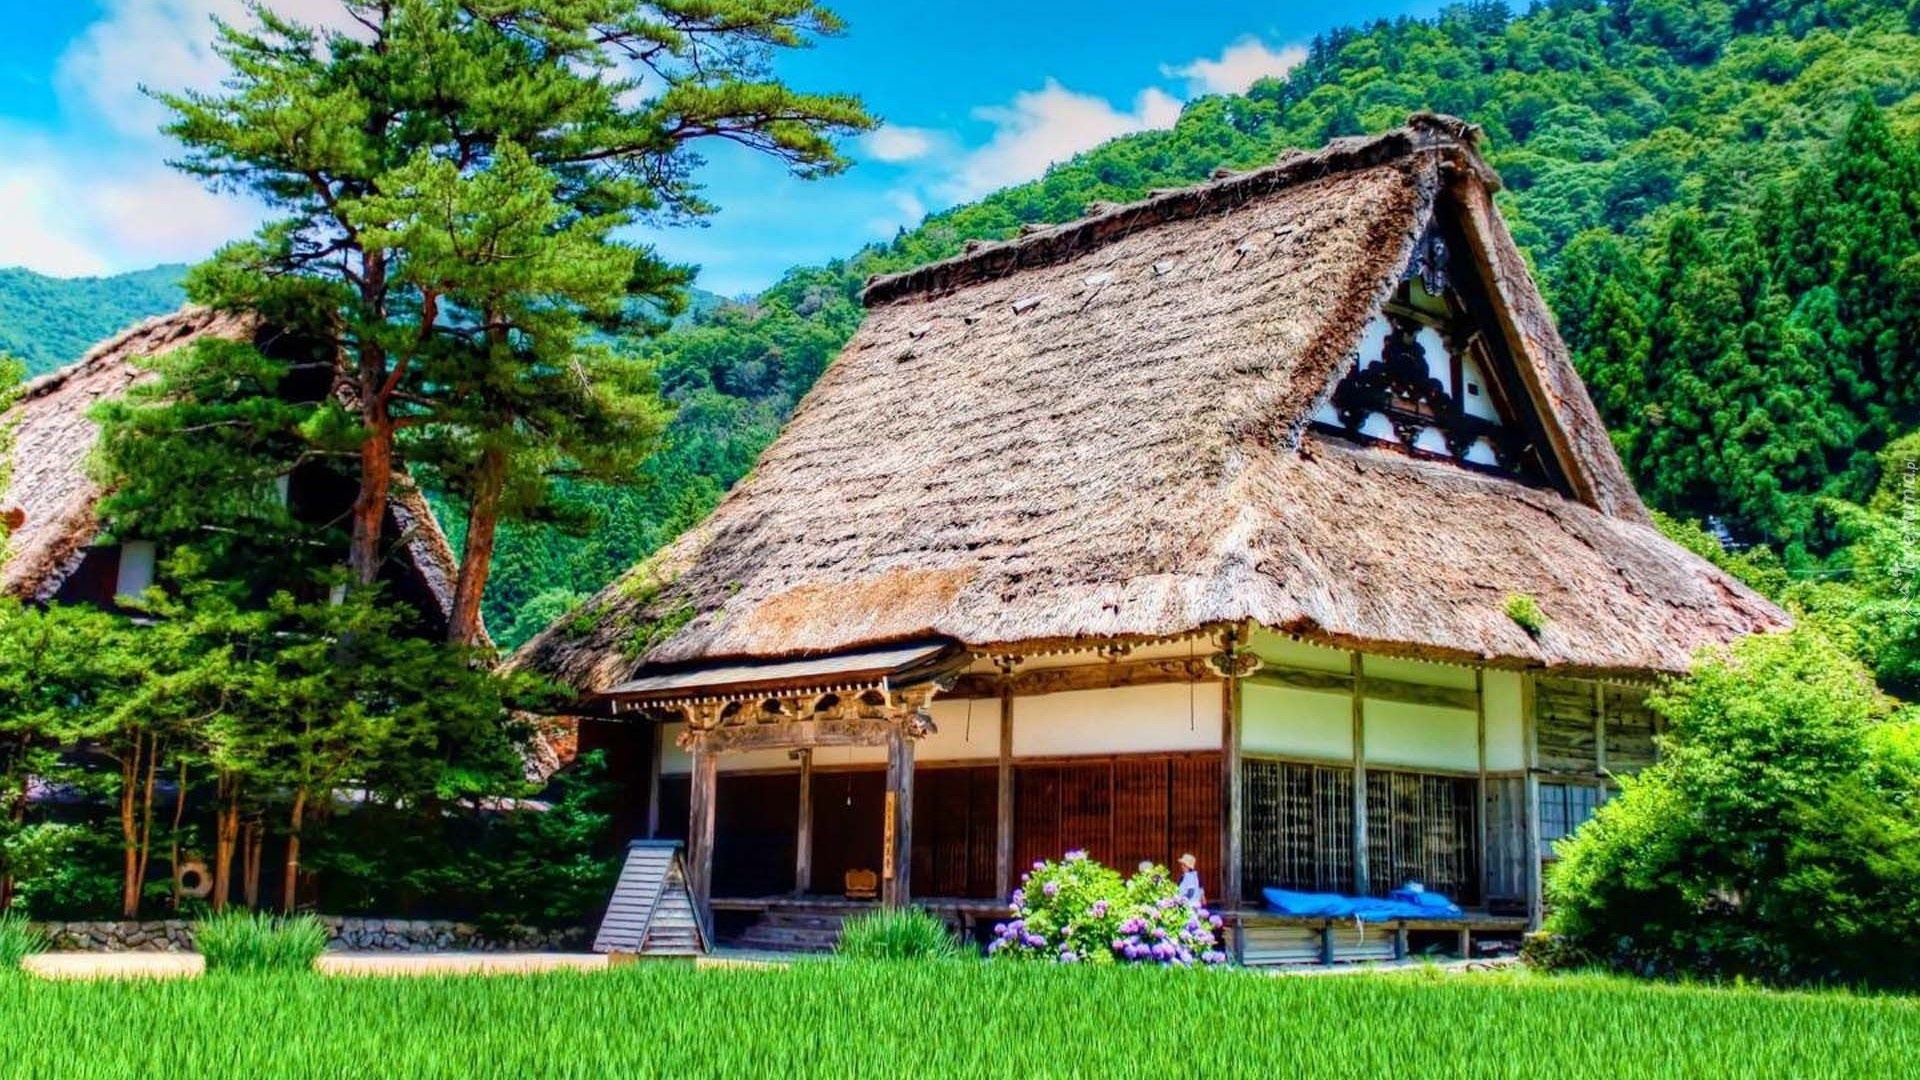 Dom, Ogród, Japonia